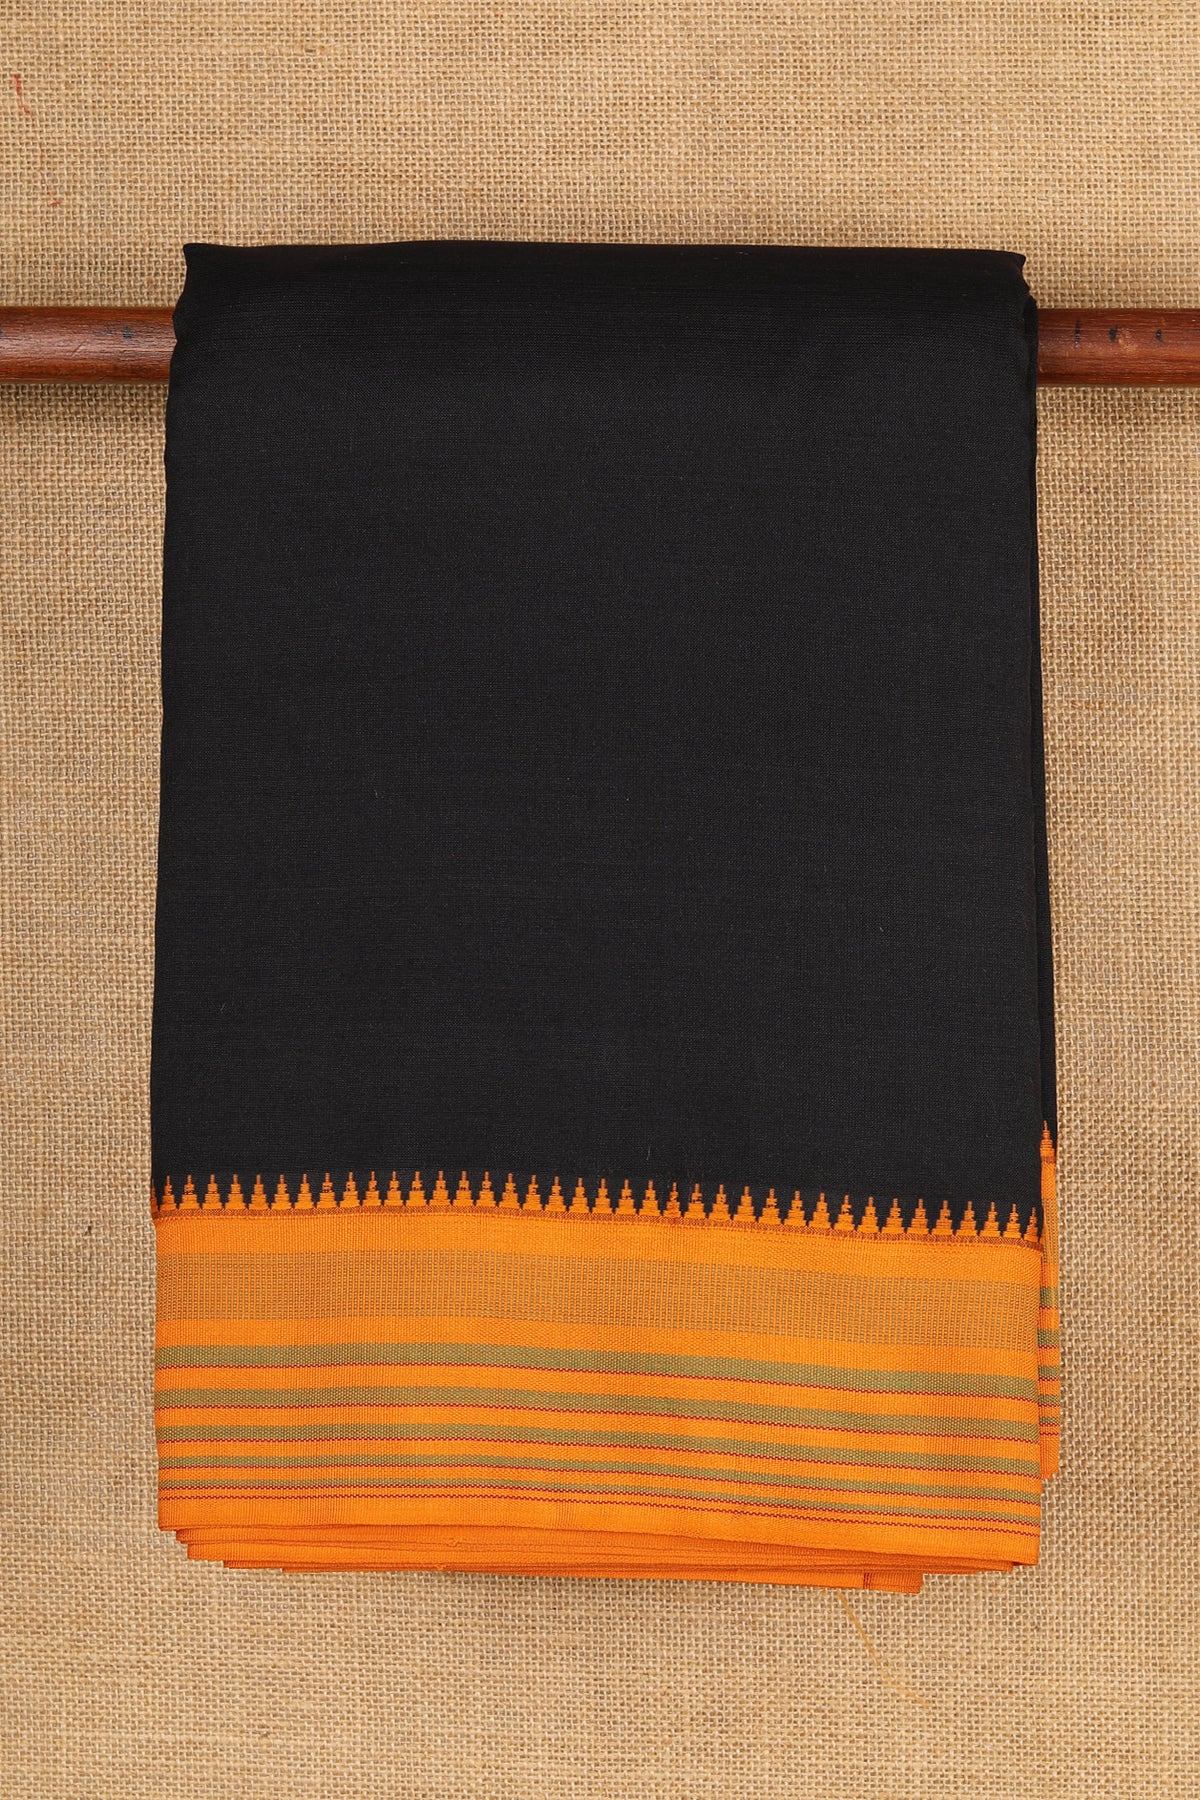 Contrast Thread Work Stripes Border In Plain Black Dharwad Cotton Saree